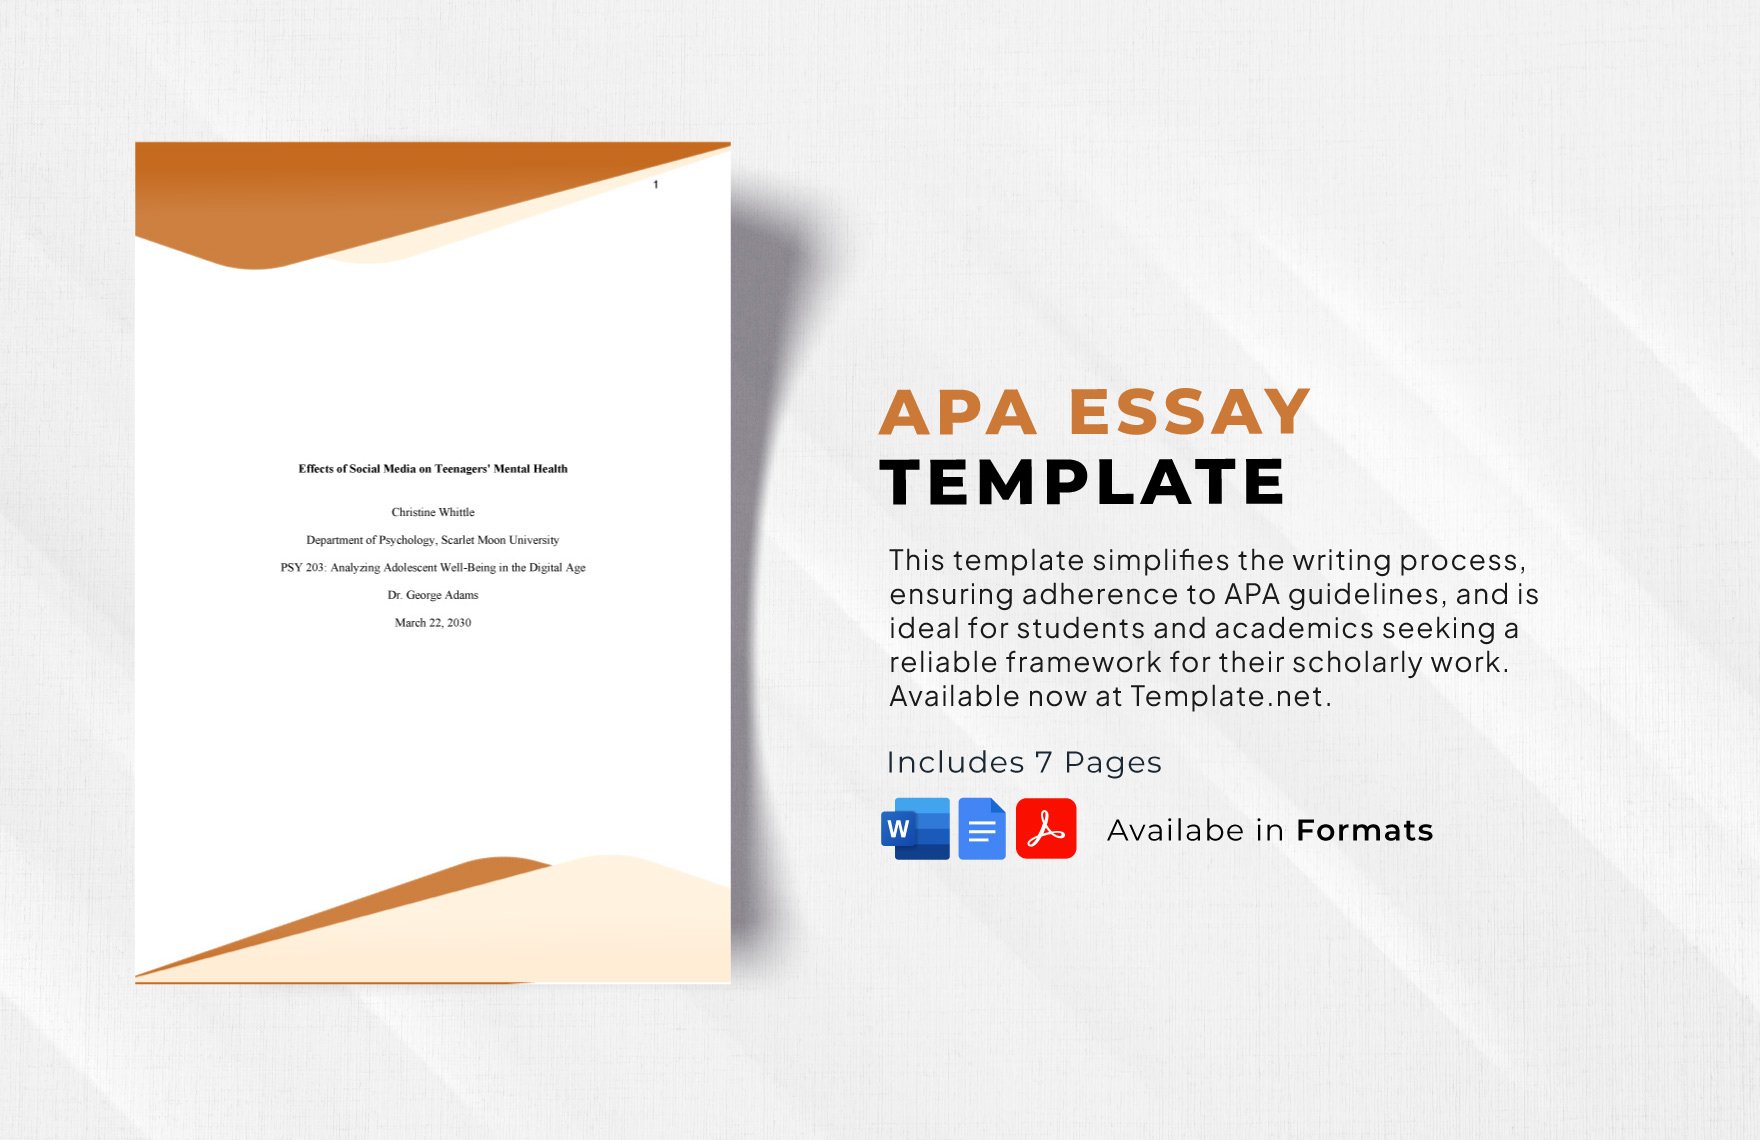 APA Essay Template